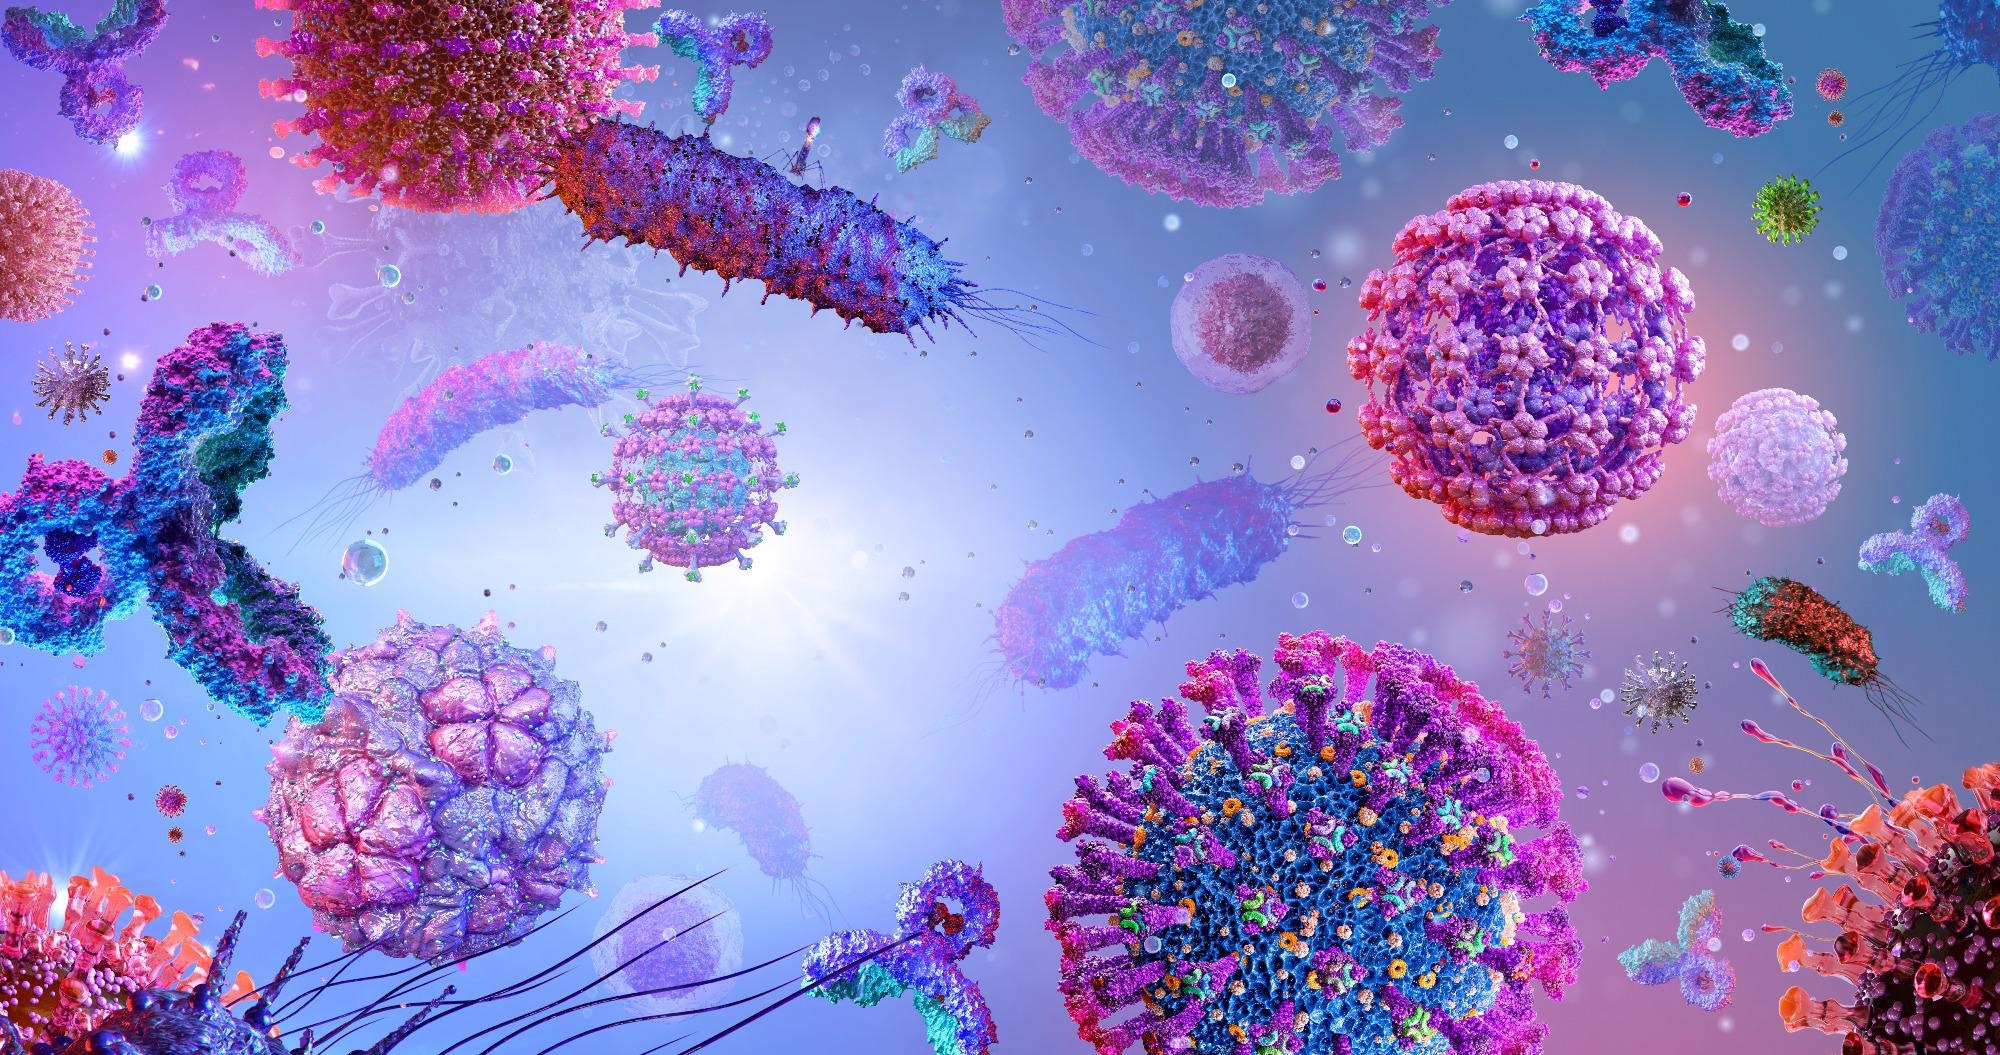 Brief Report: Reduction and persistence of co-circulating respiratory viruses during the SARS-CoV-2 pandemic. Image Credit: Corona Borealis Studio/ Shutterstock